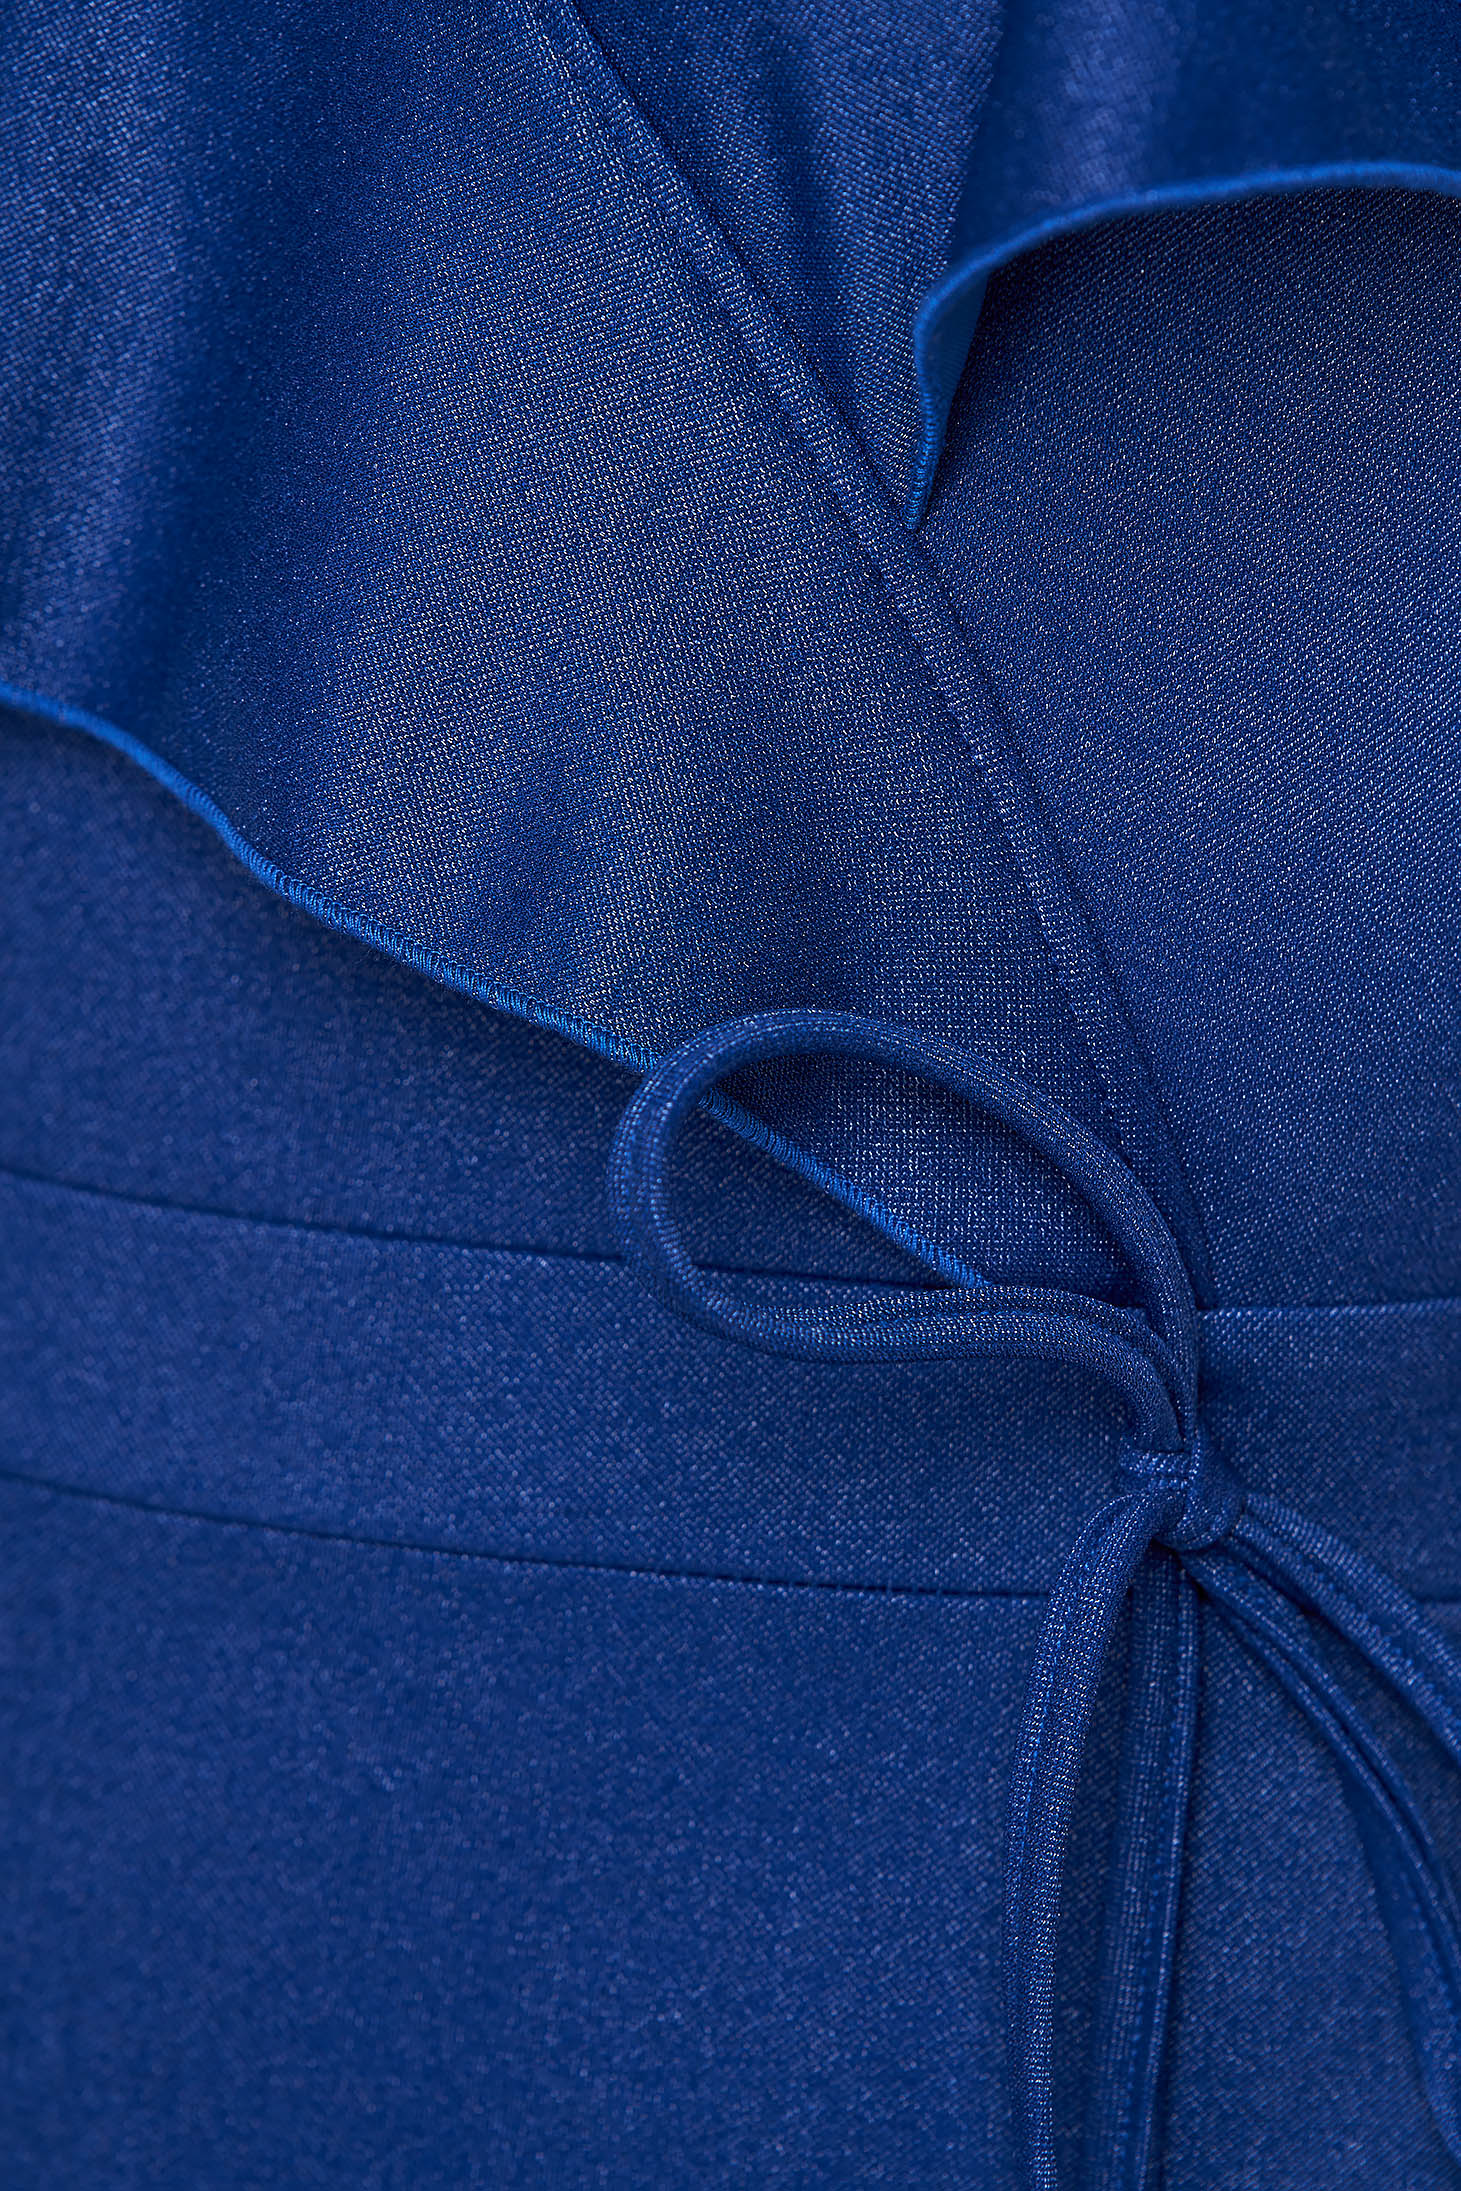 Rochie din crep albastra pana la genunchi tip creion cu aplicatii cu sclipici - StarShinerS 5 - StarShinerS.ro